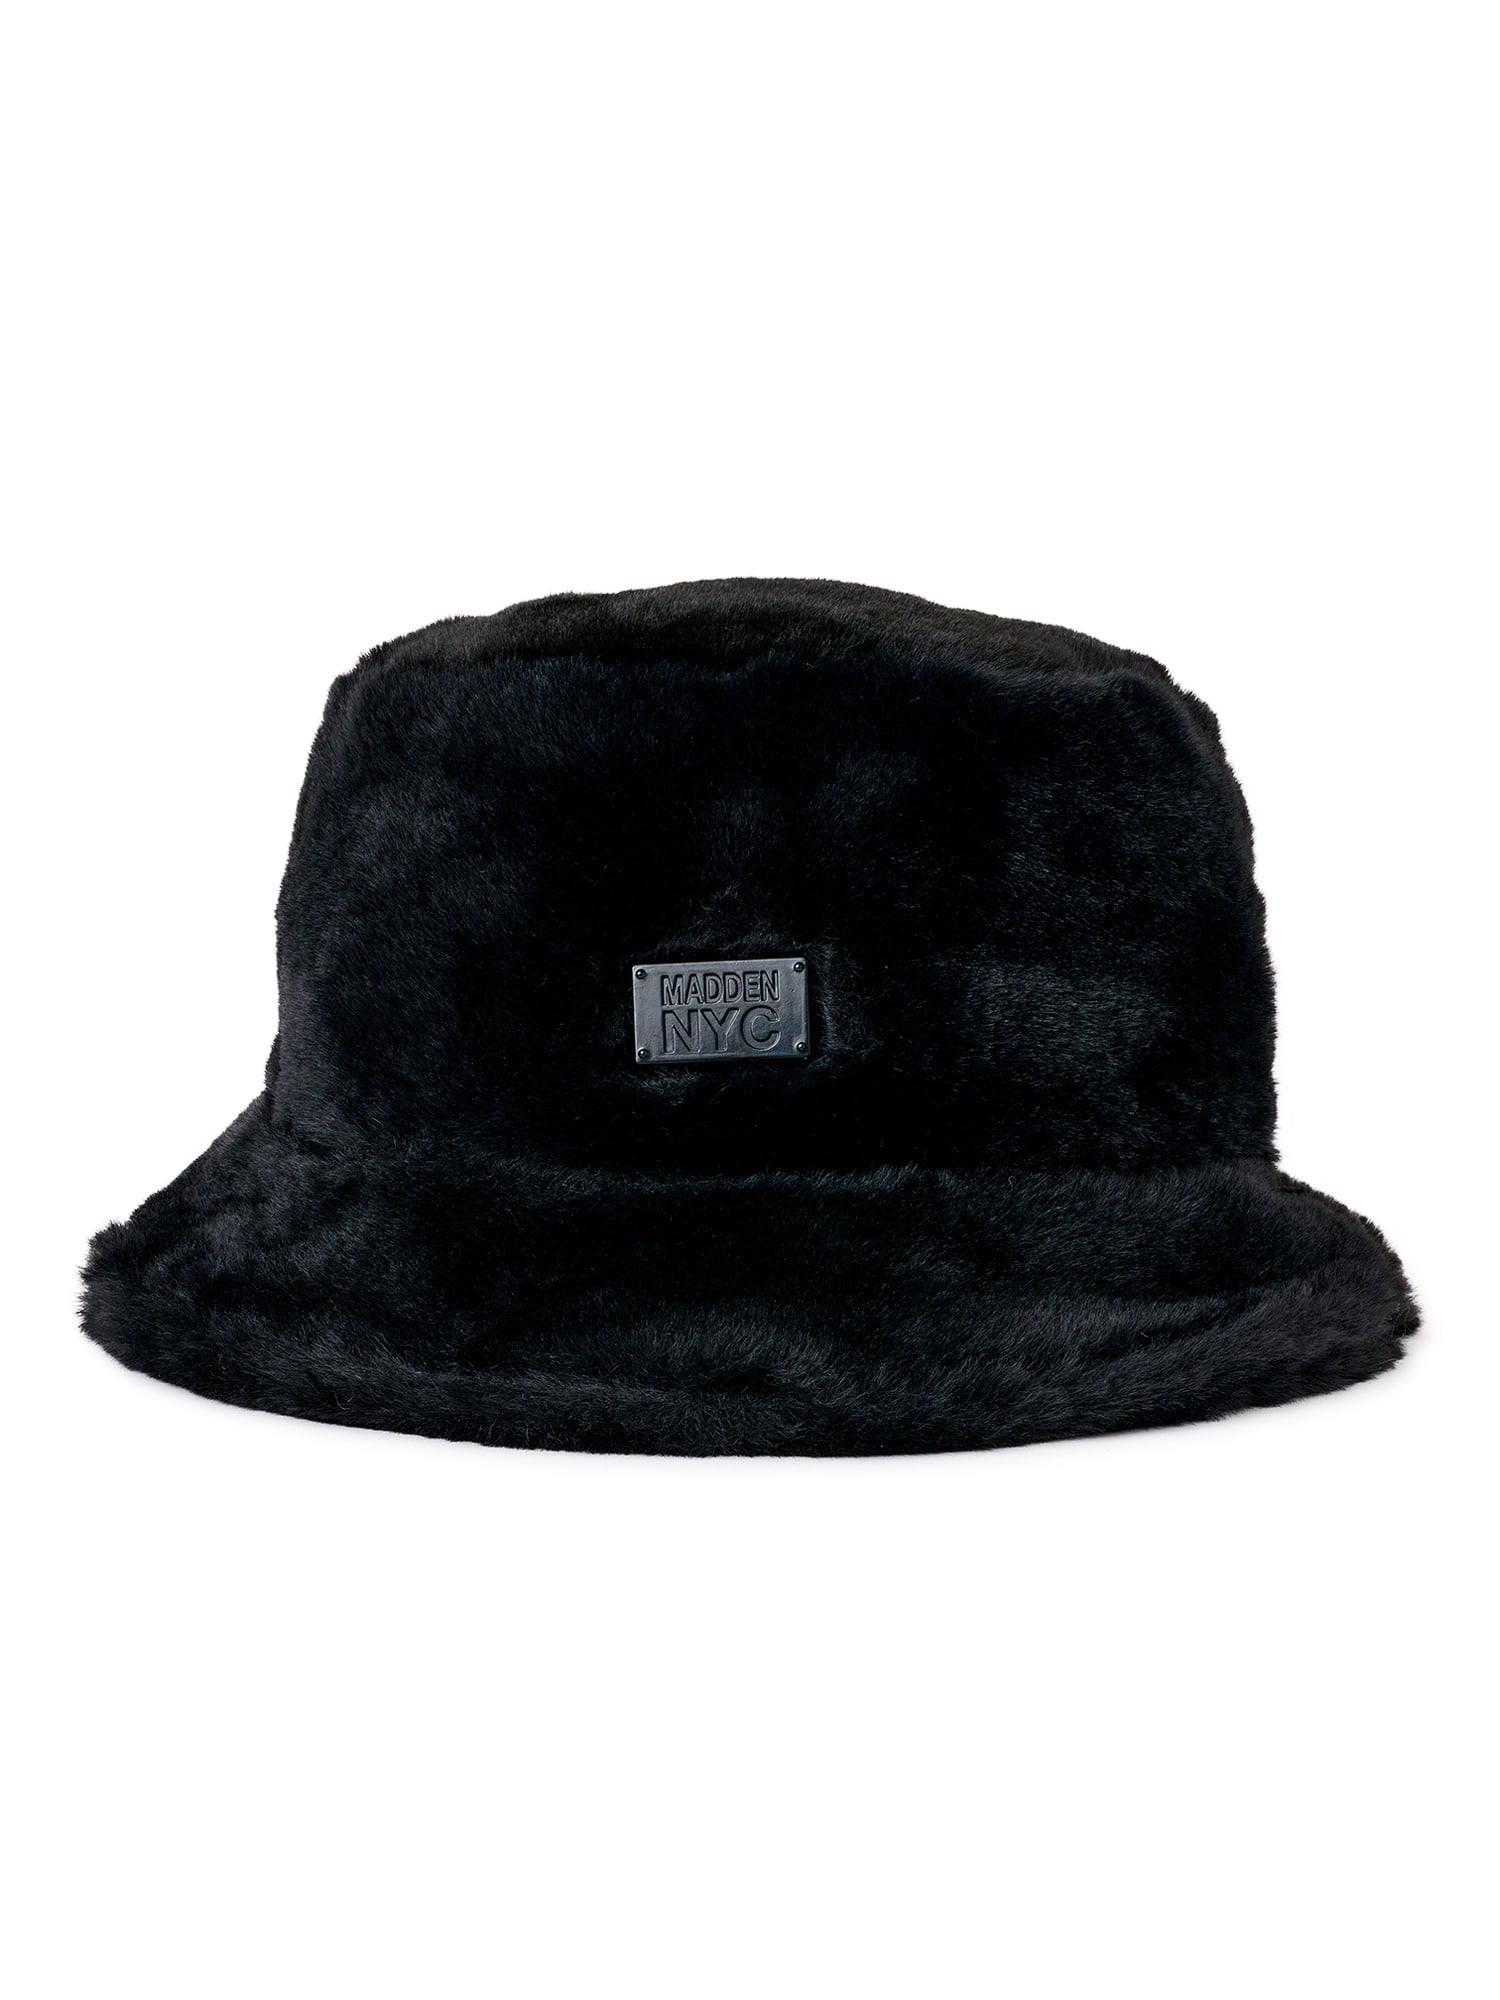 Madden NYC Faux Fur Bucket Hat